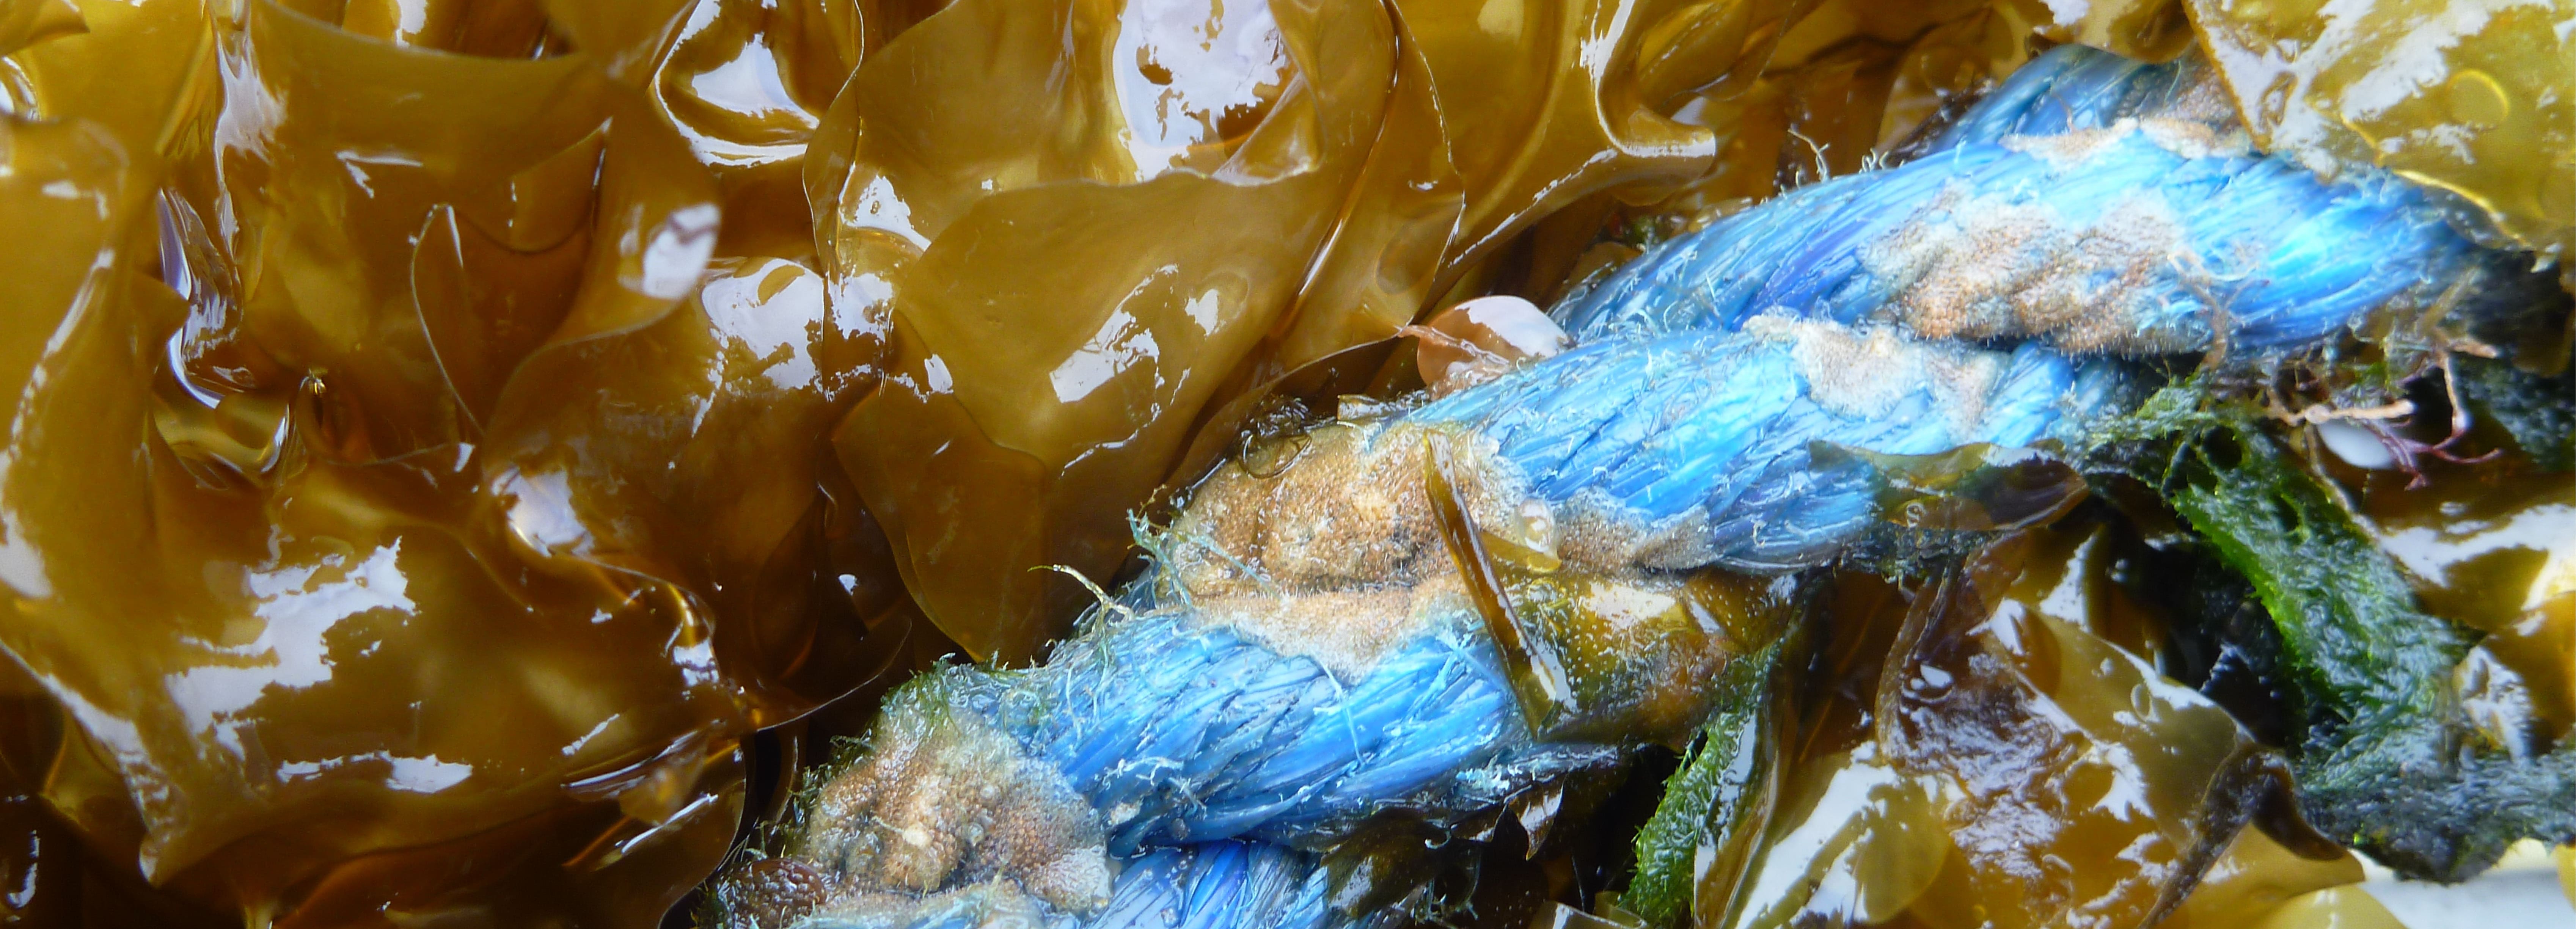 Seaweed and blue nylon rope